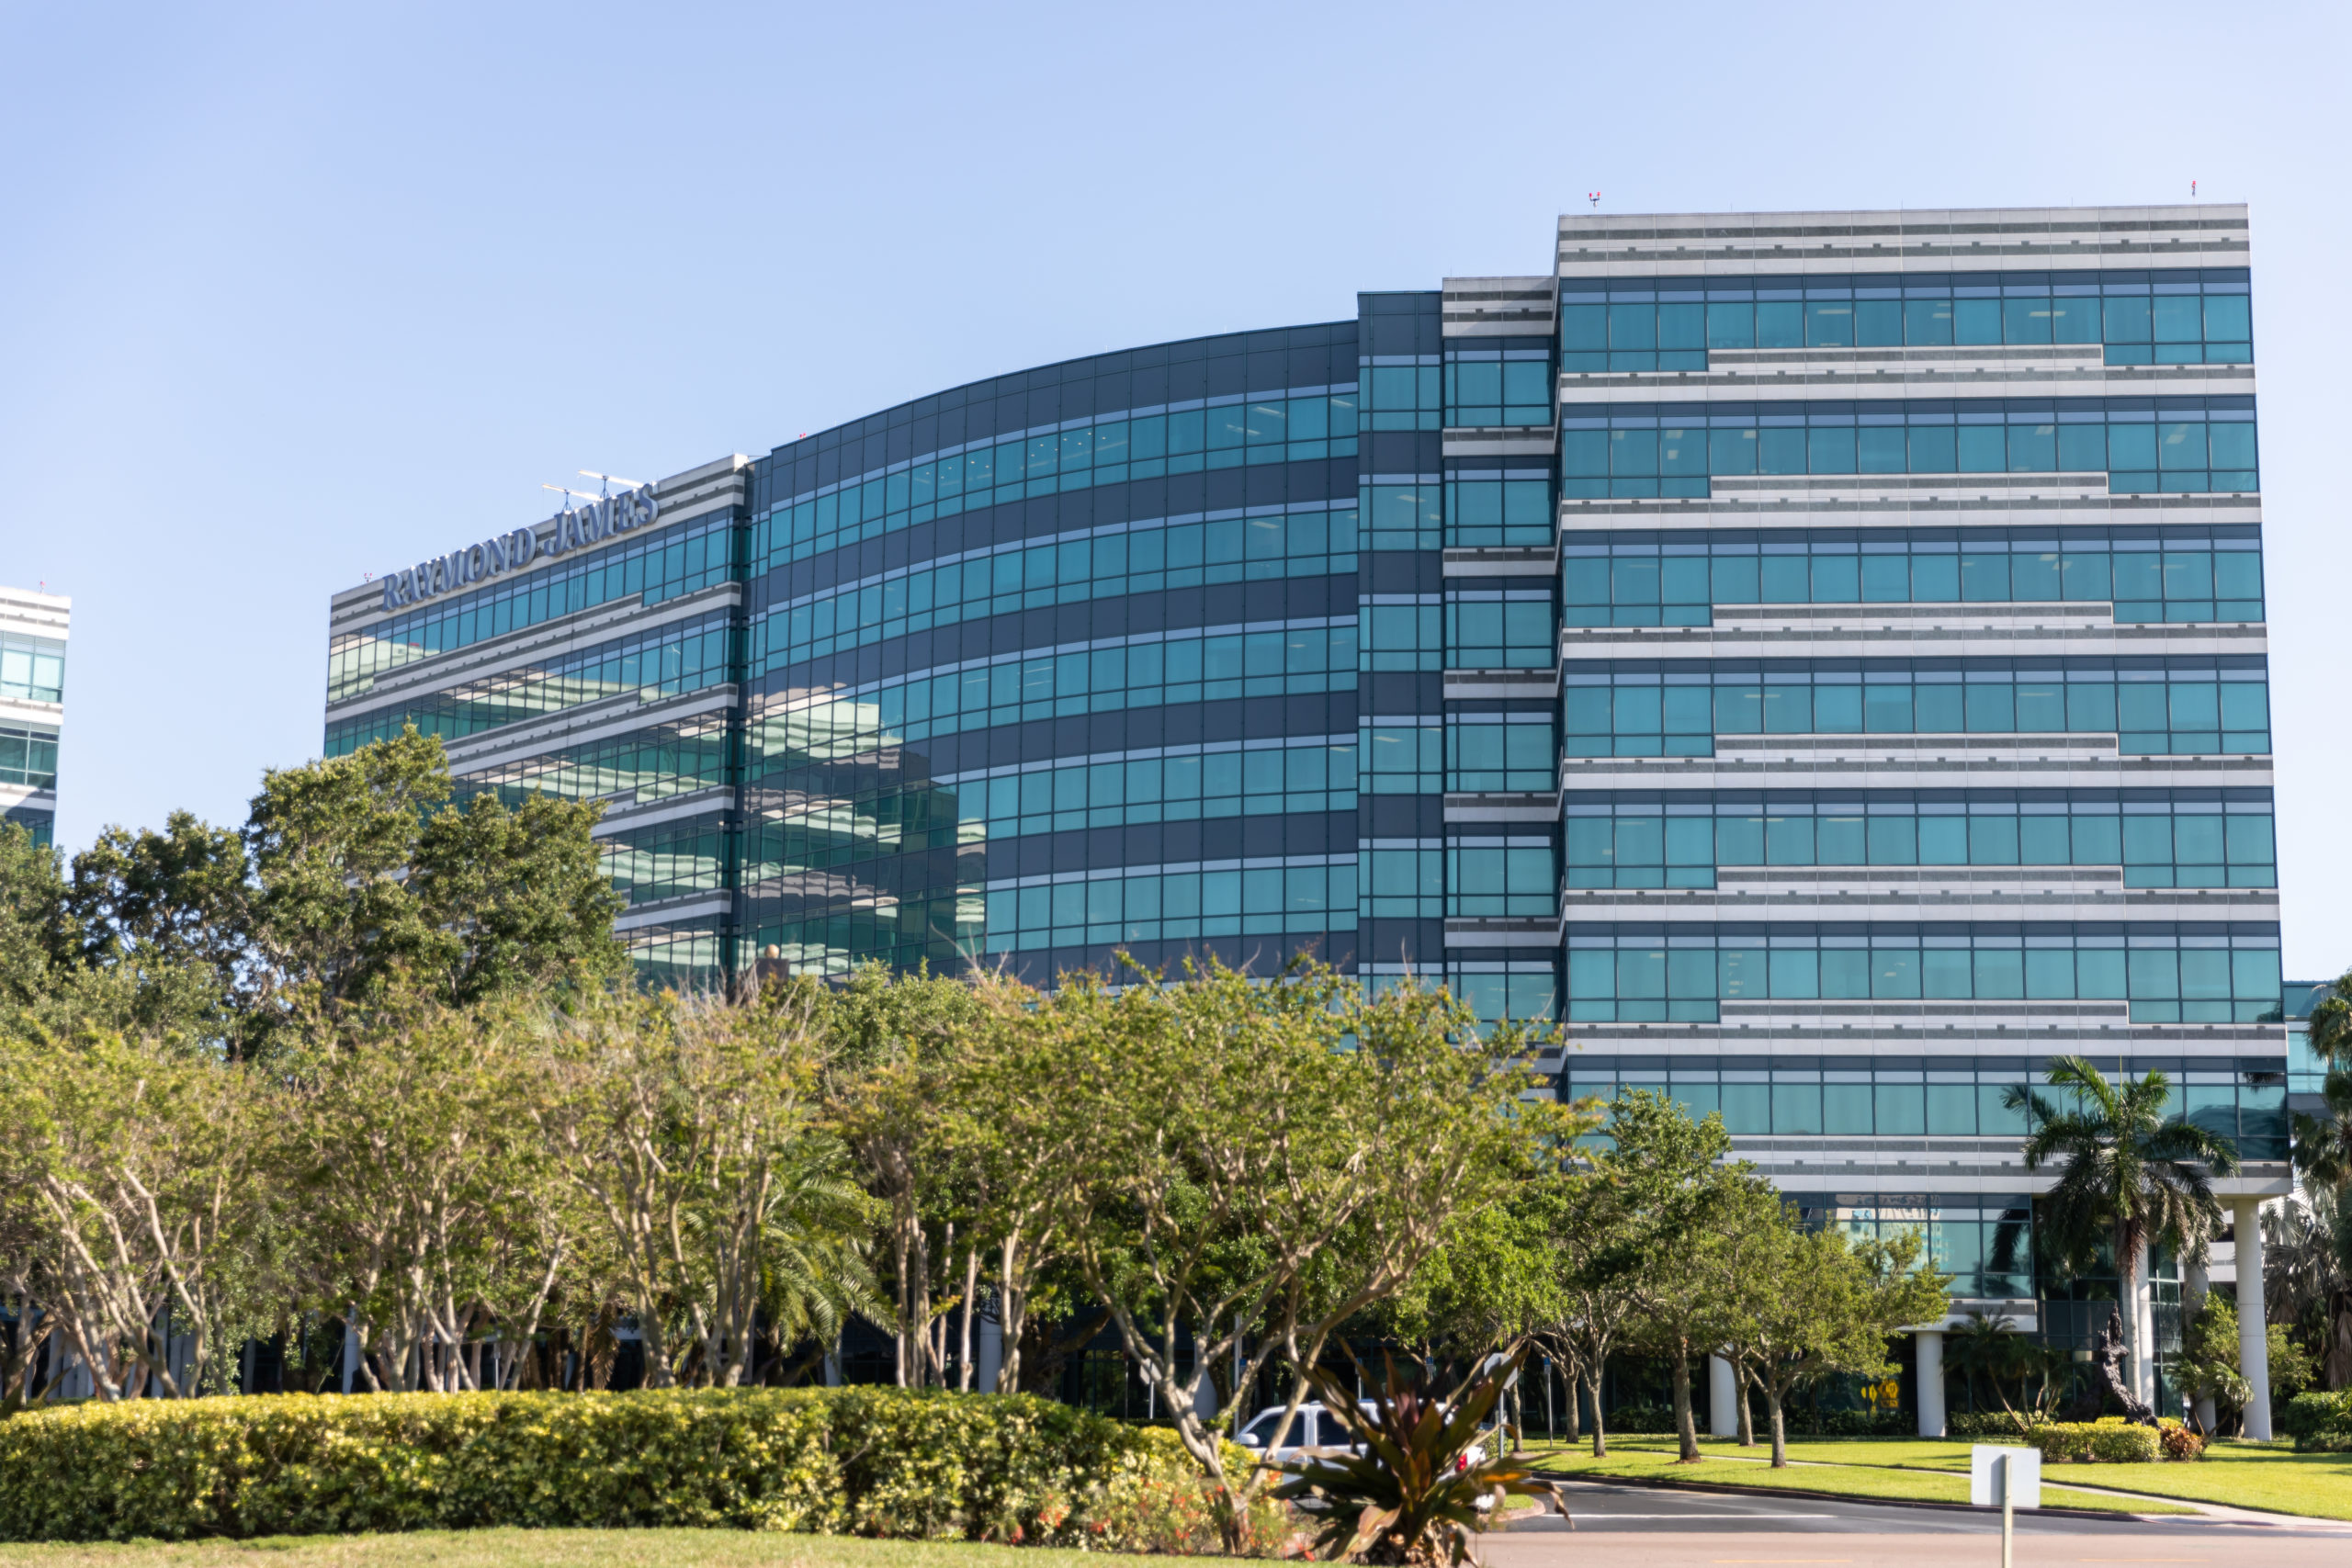 Image of the Raymond James corporate headquarters building.